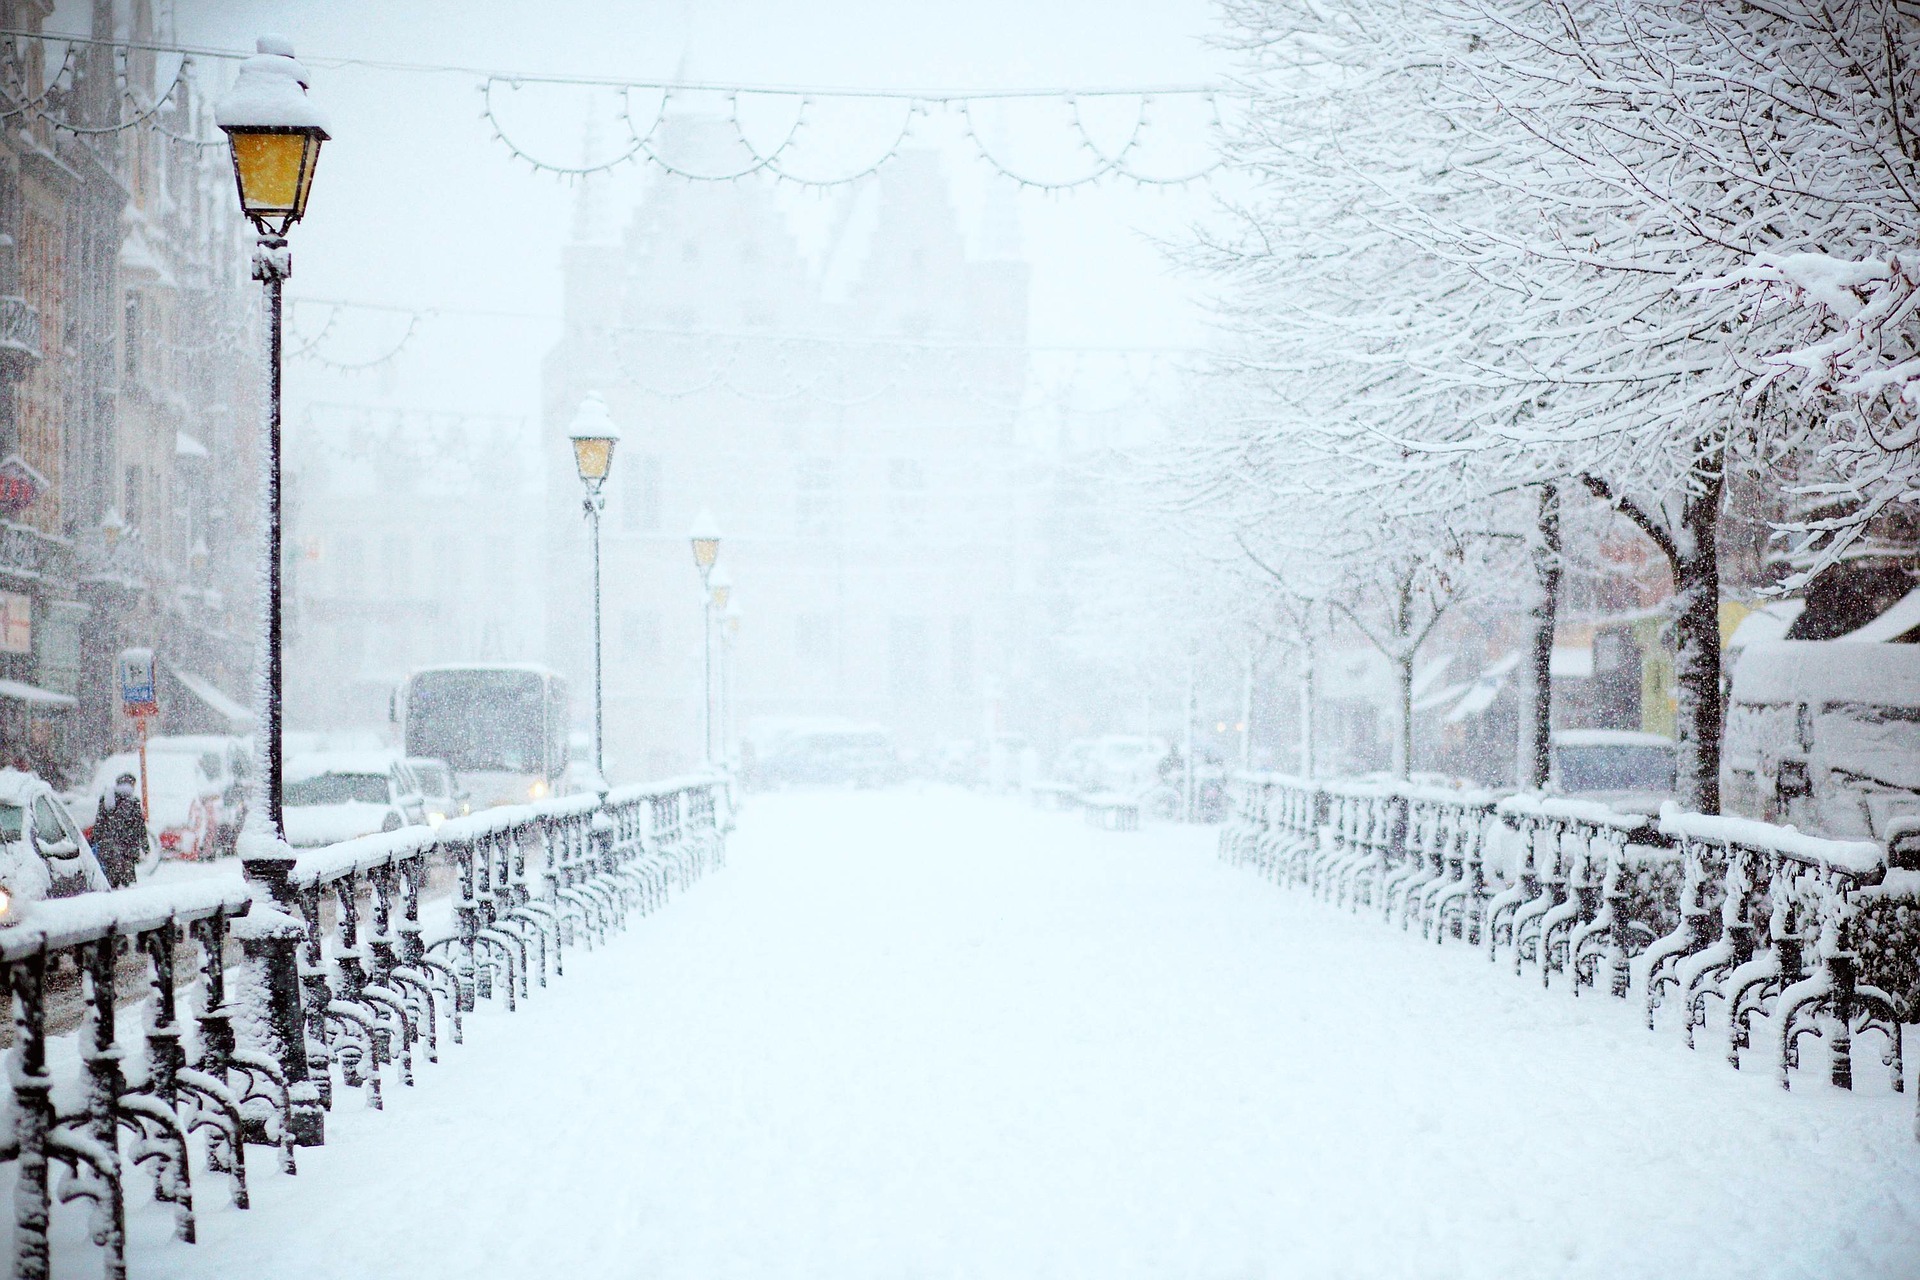 Snowy city scene